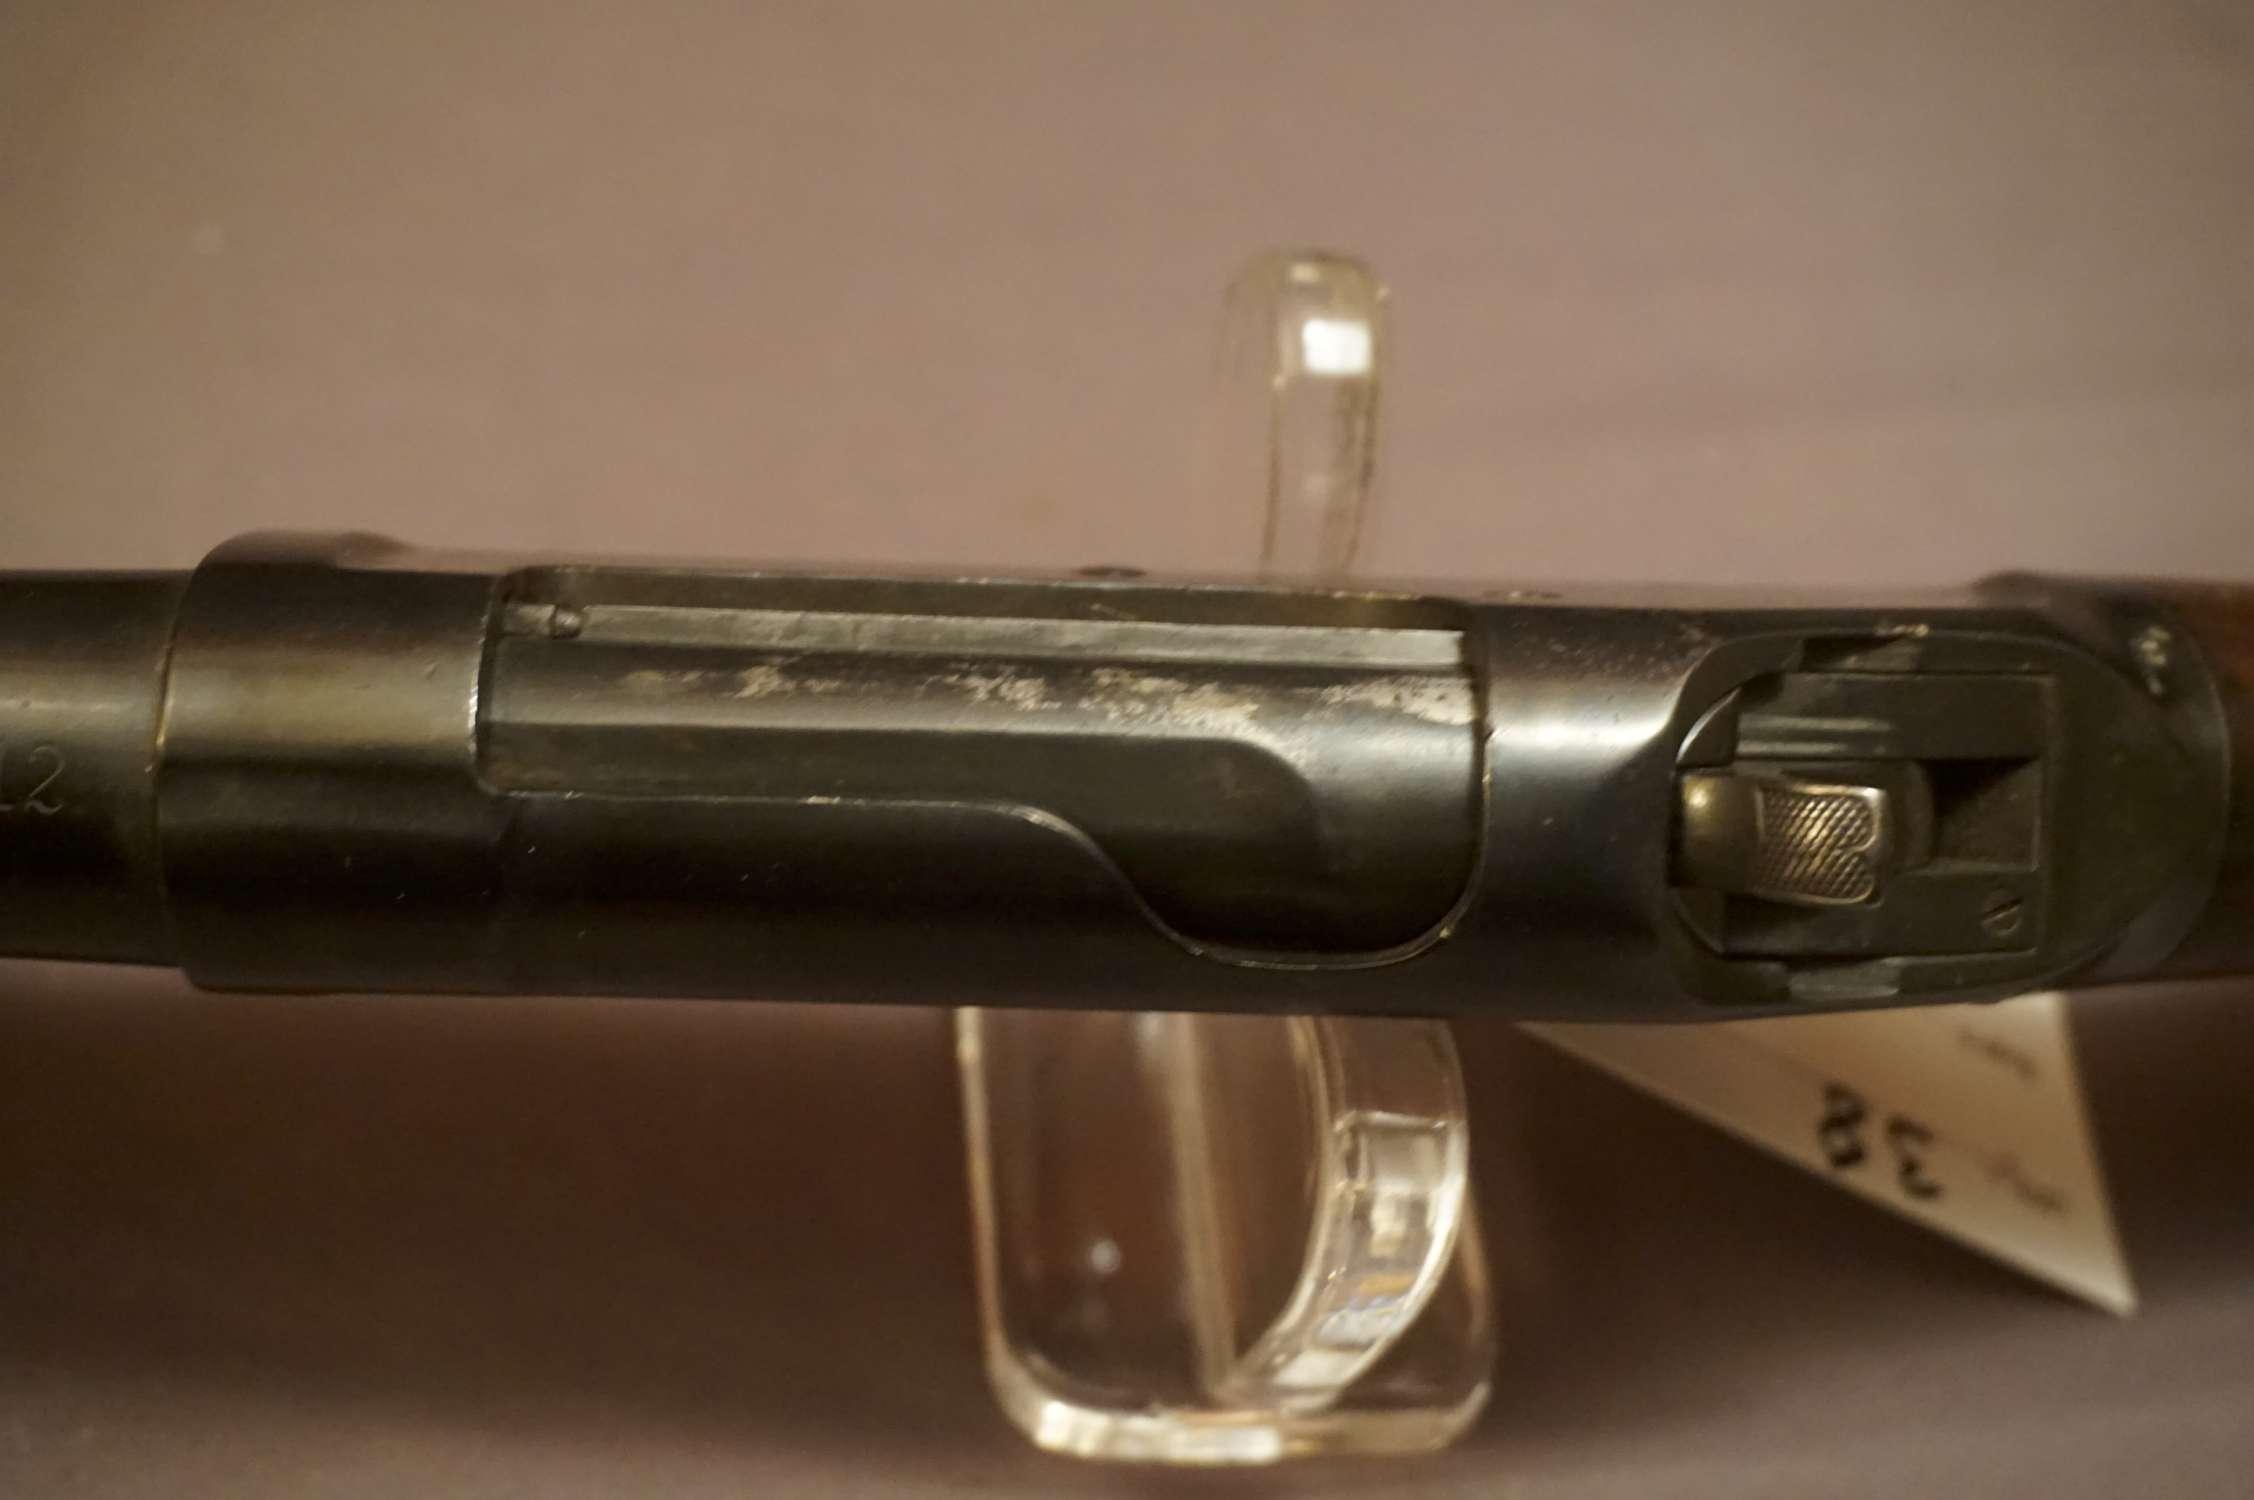 Winchester M. 1893 12ga Pump Shotgun